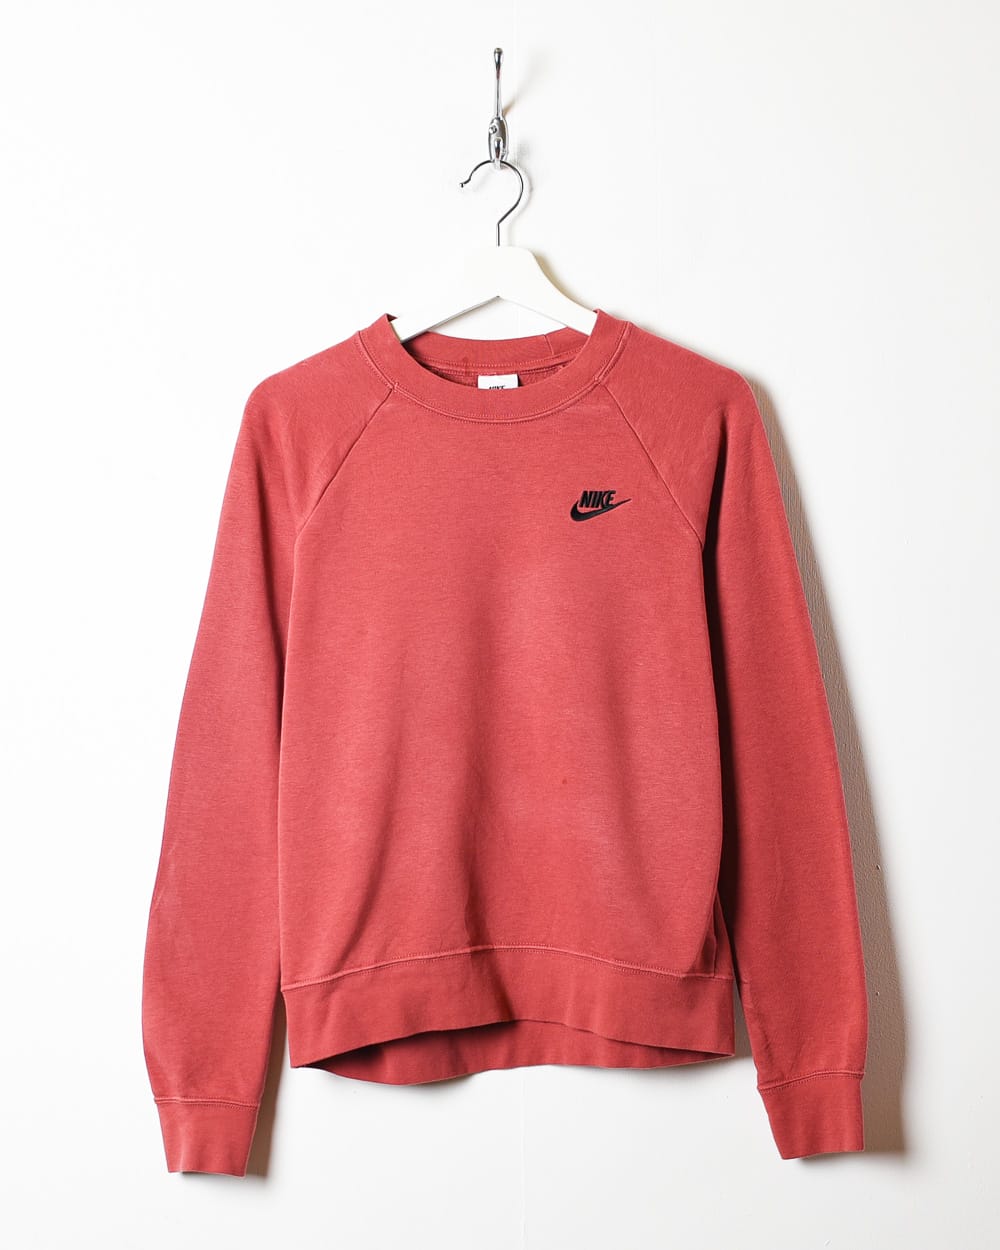 Maroon Nike Sweatshirt - Small Women's